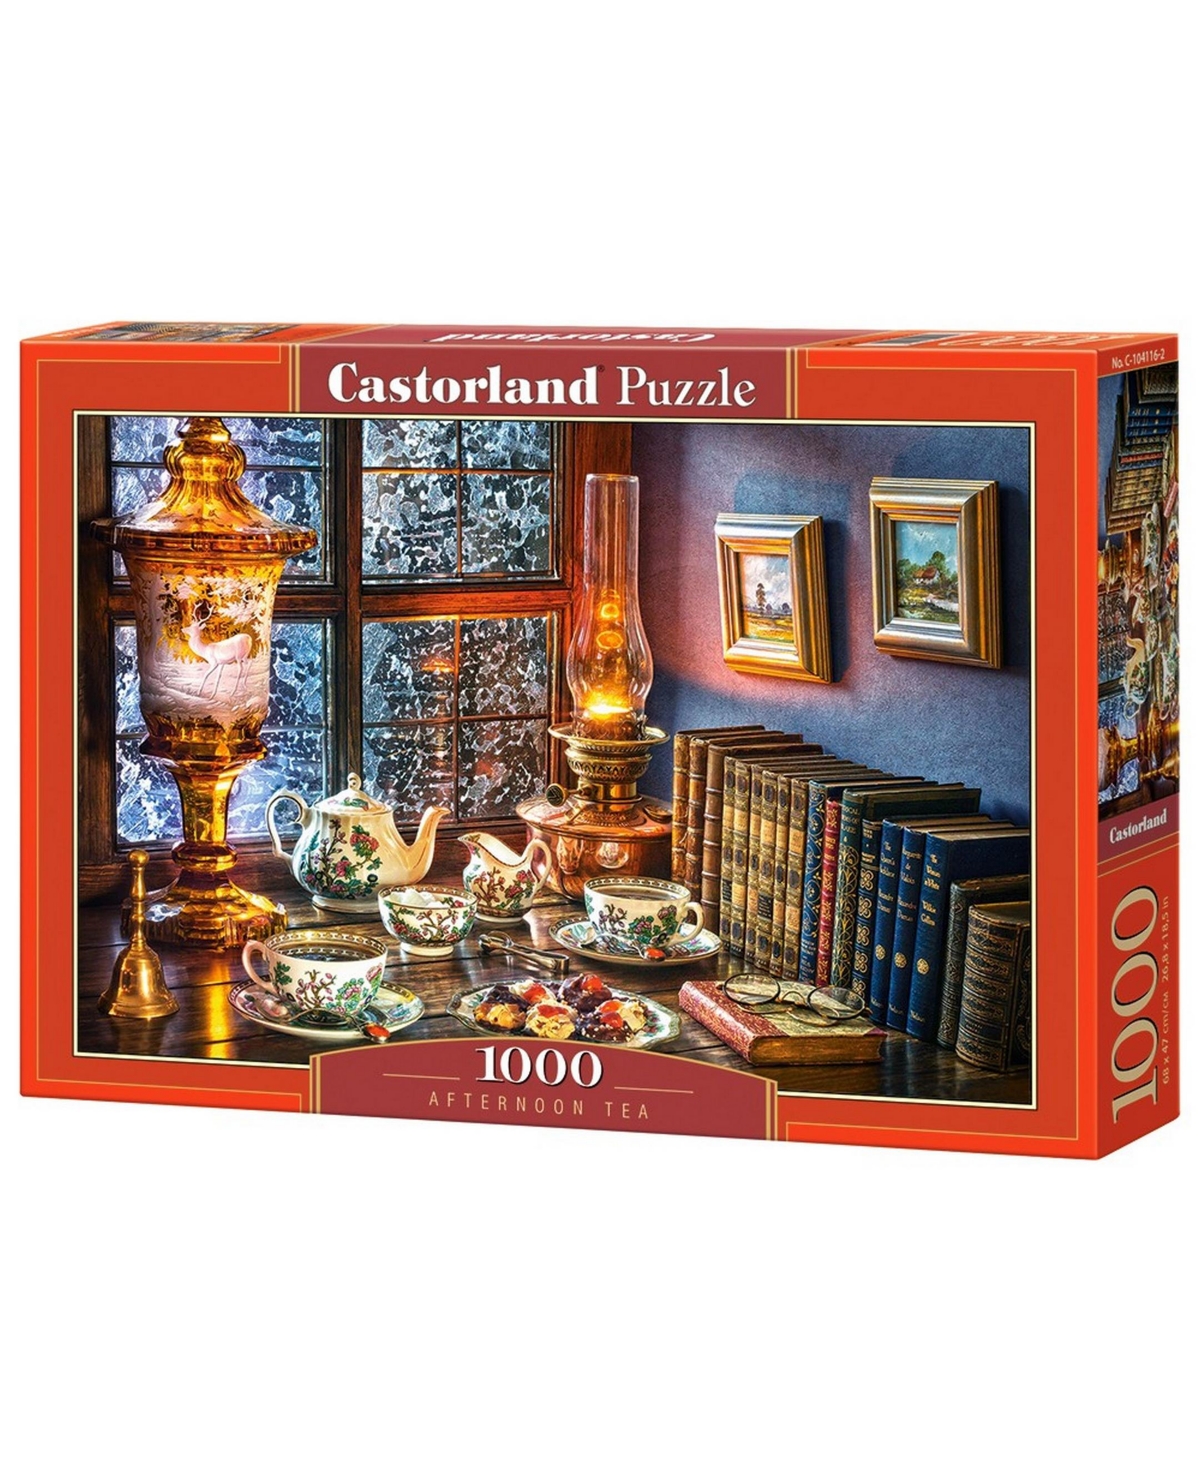 Castorland Afternoon Tea Jigsaw Puzzle Set, 1000 Piece In Multicolor